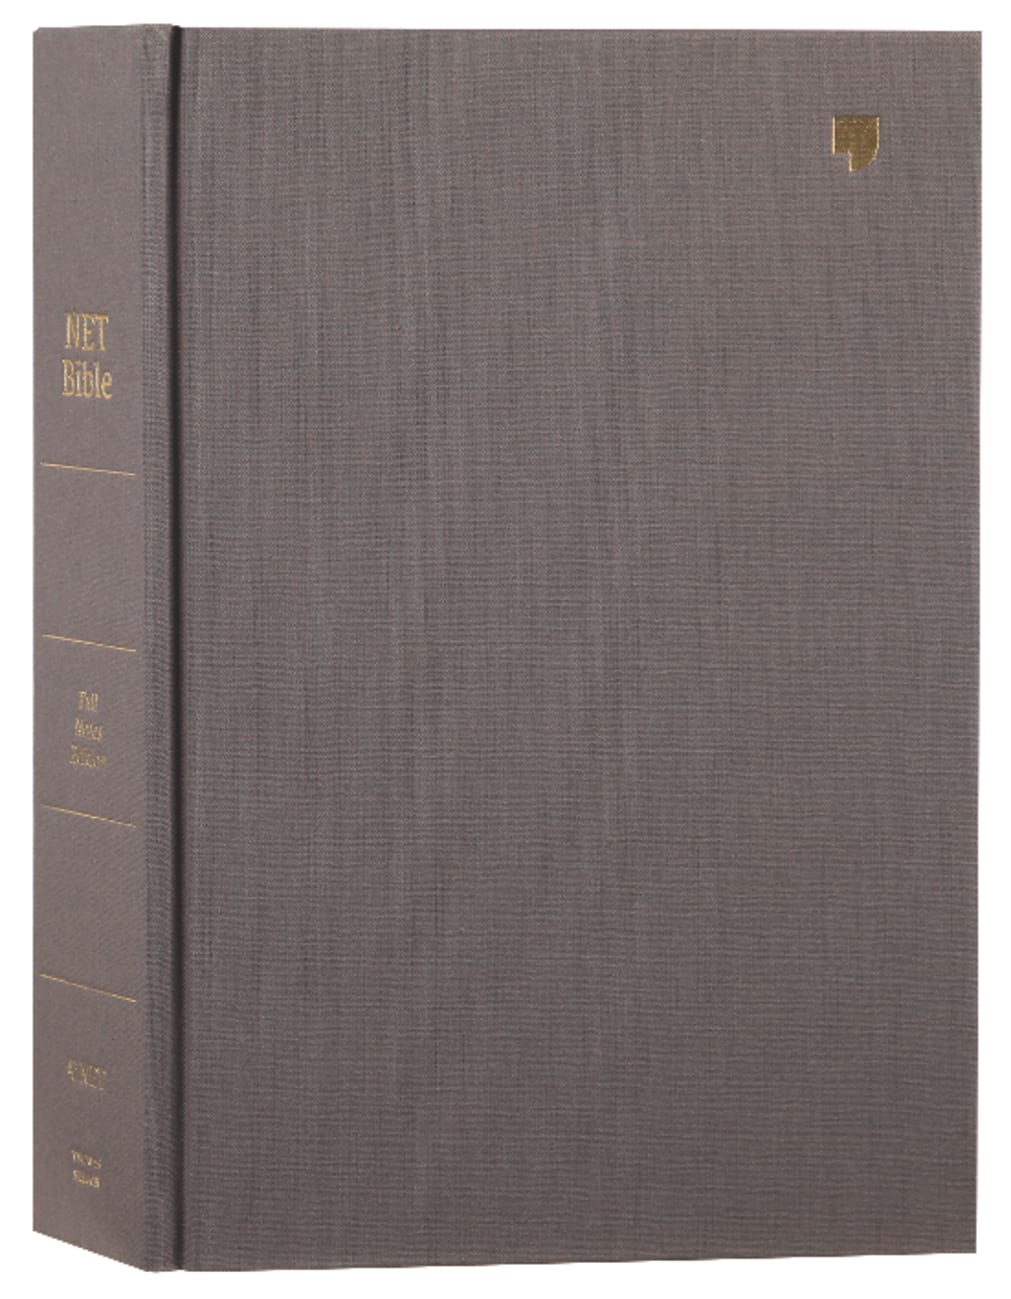 NET Bible Full-Notes Edition Gray Fabric Over Hardback